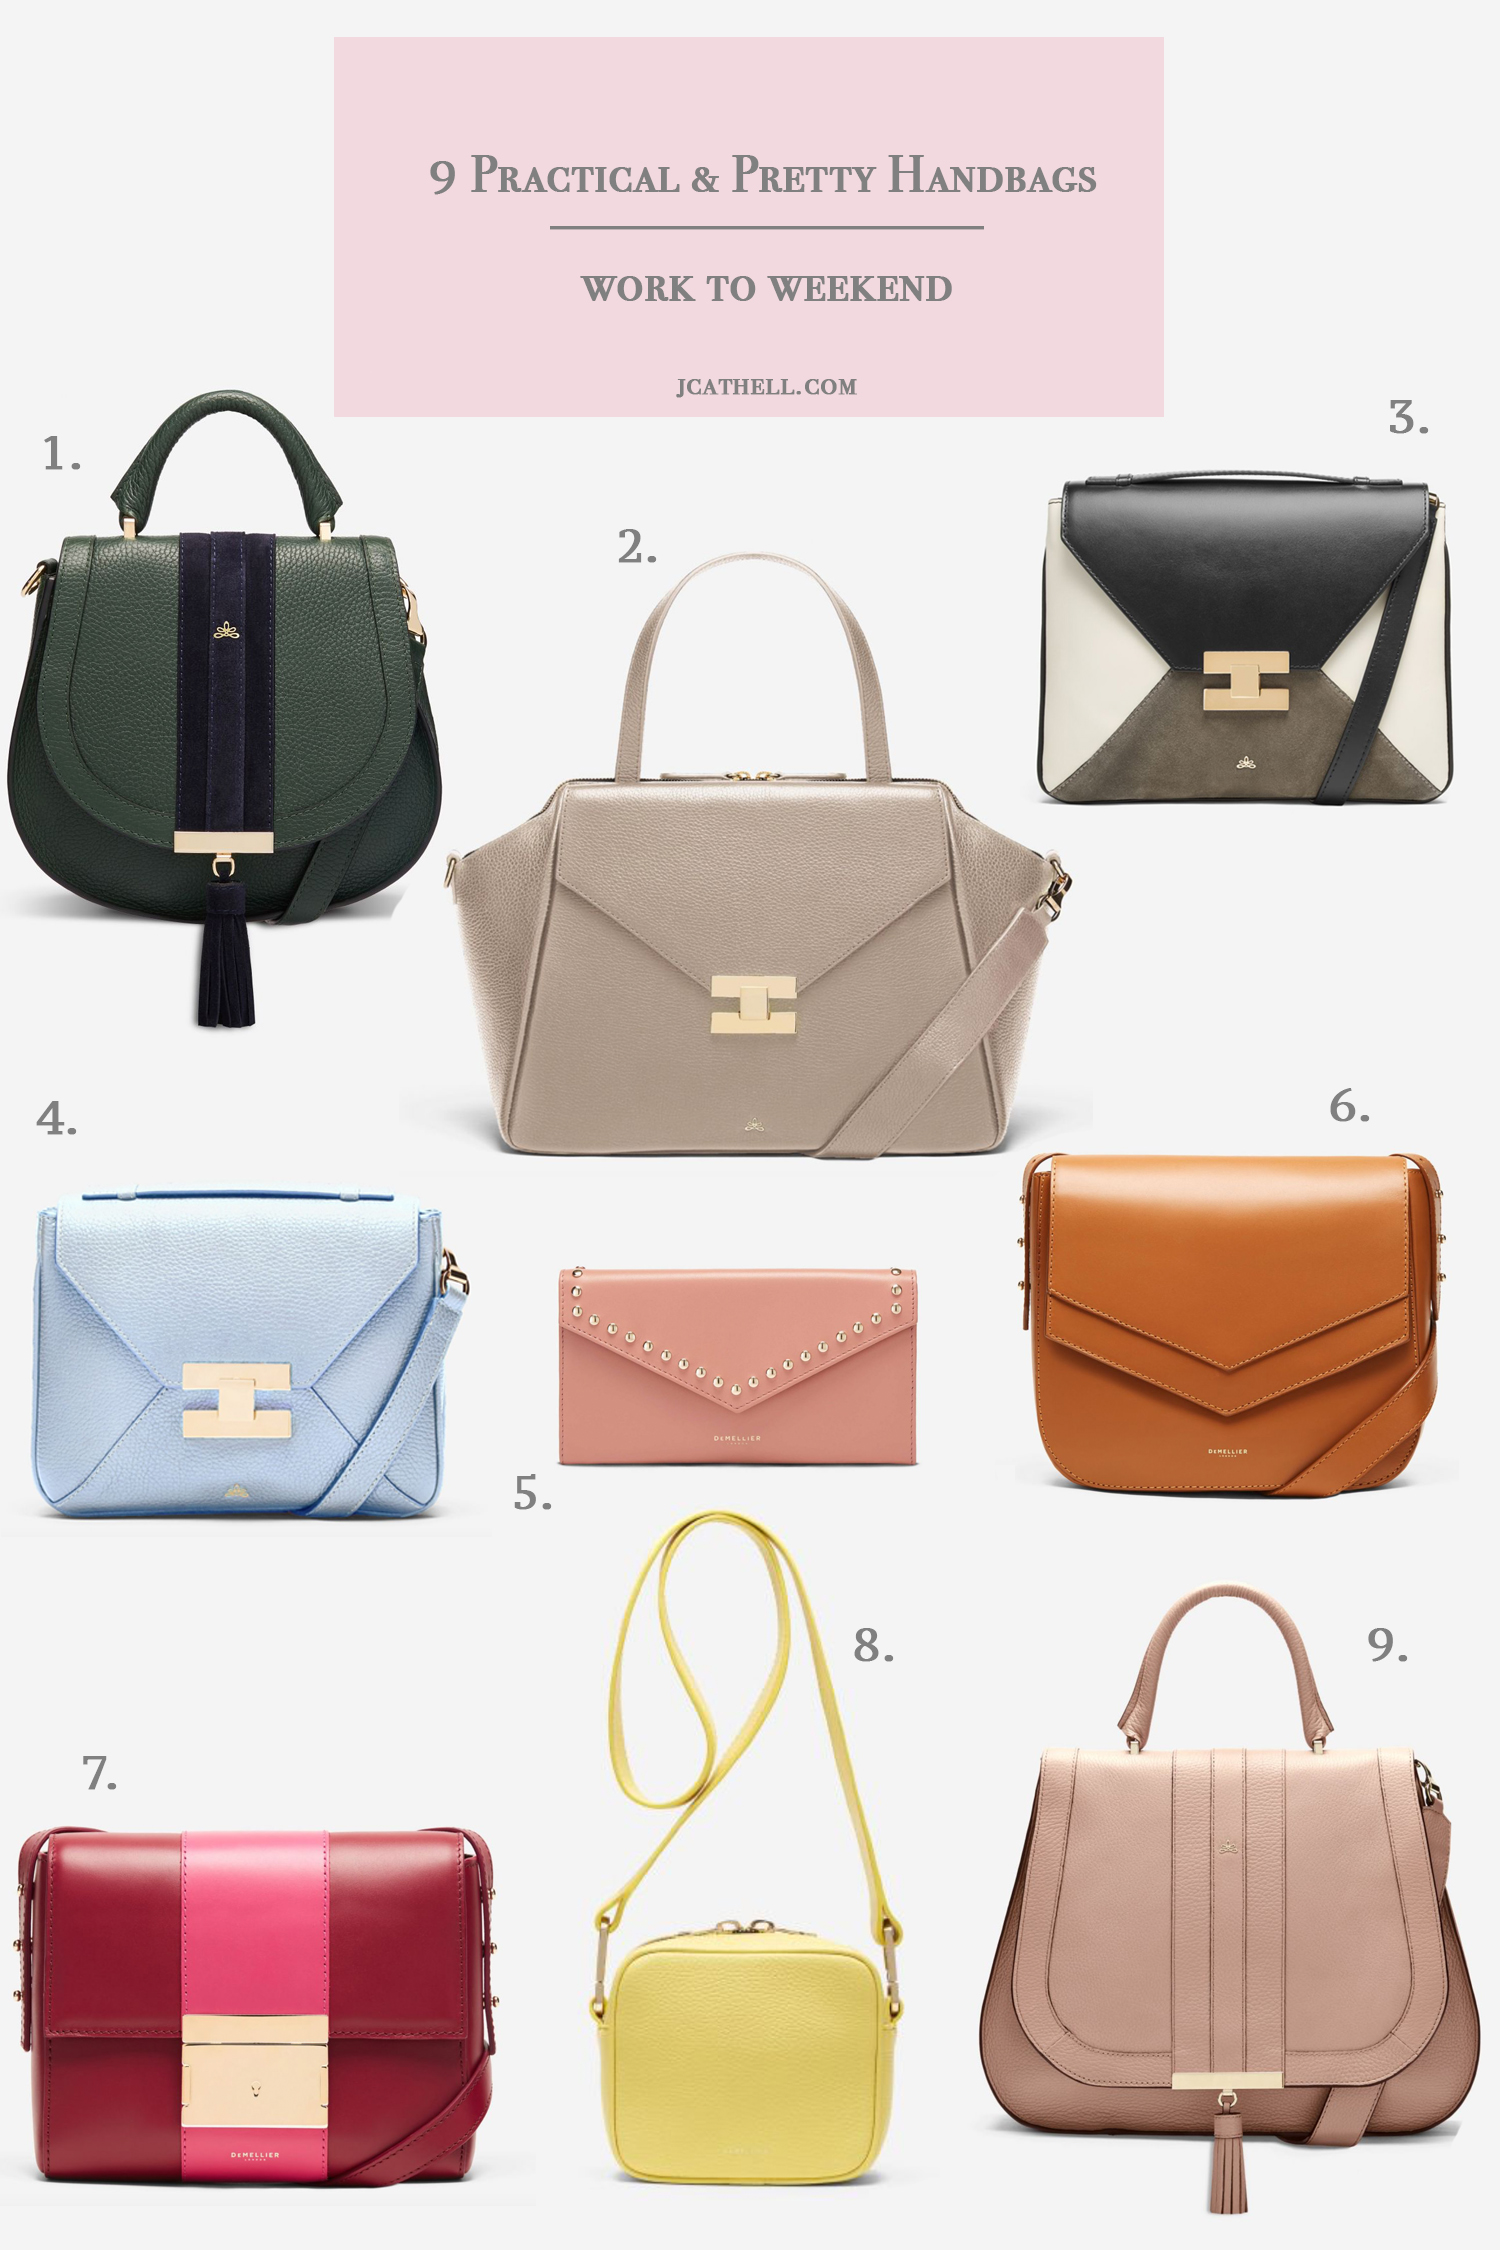 9 practical and pretty handbags